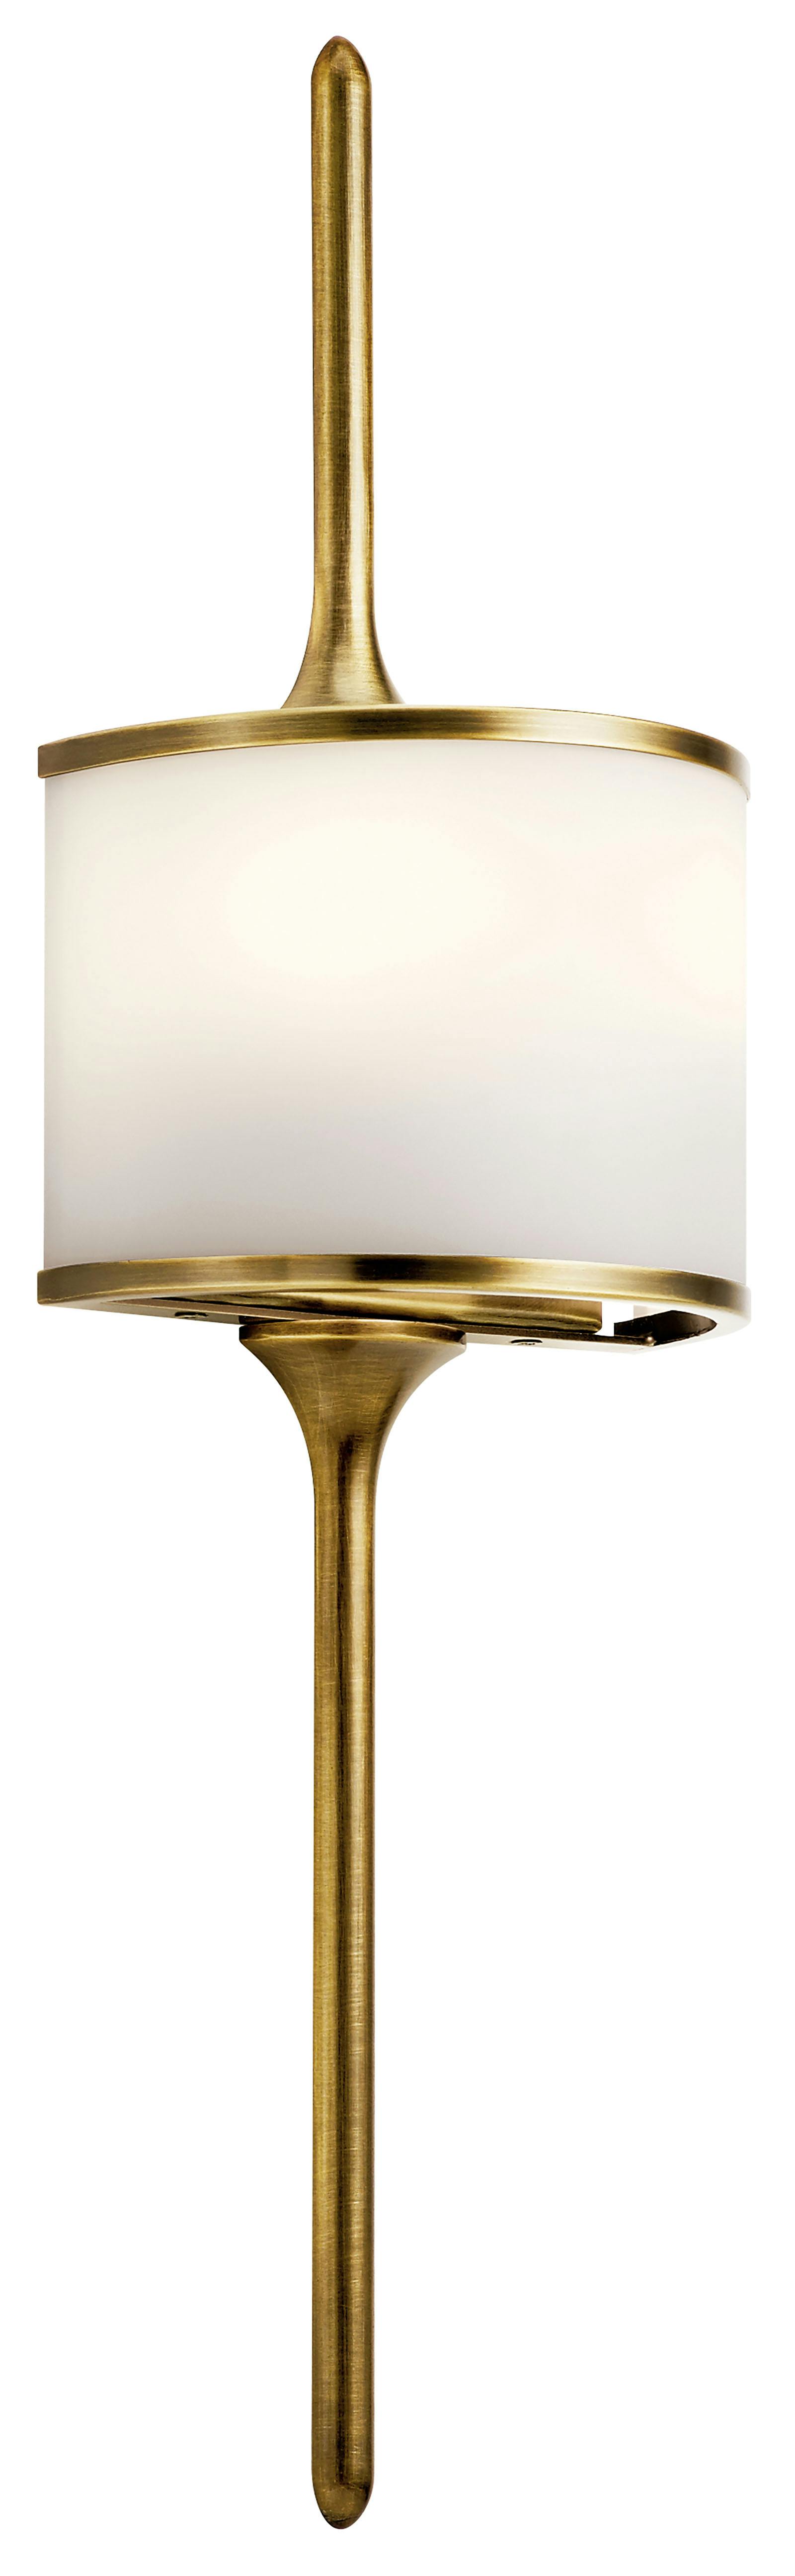 Mona 2 Light Halogen Sconce Natural Brass on a white background